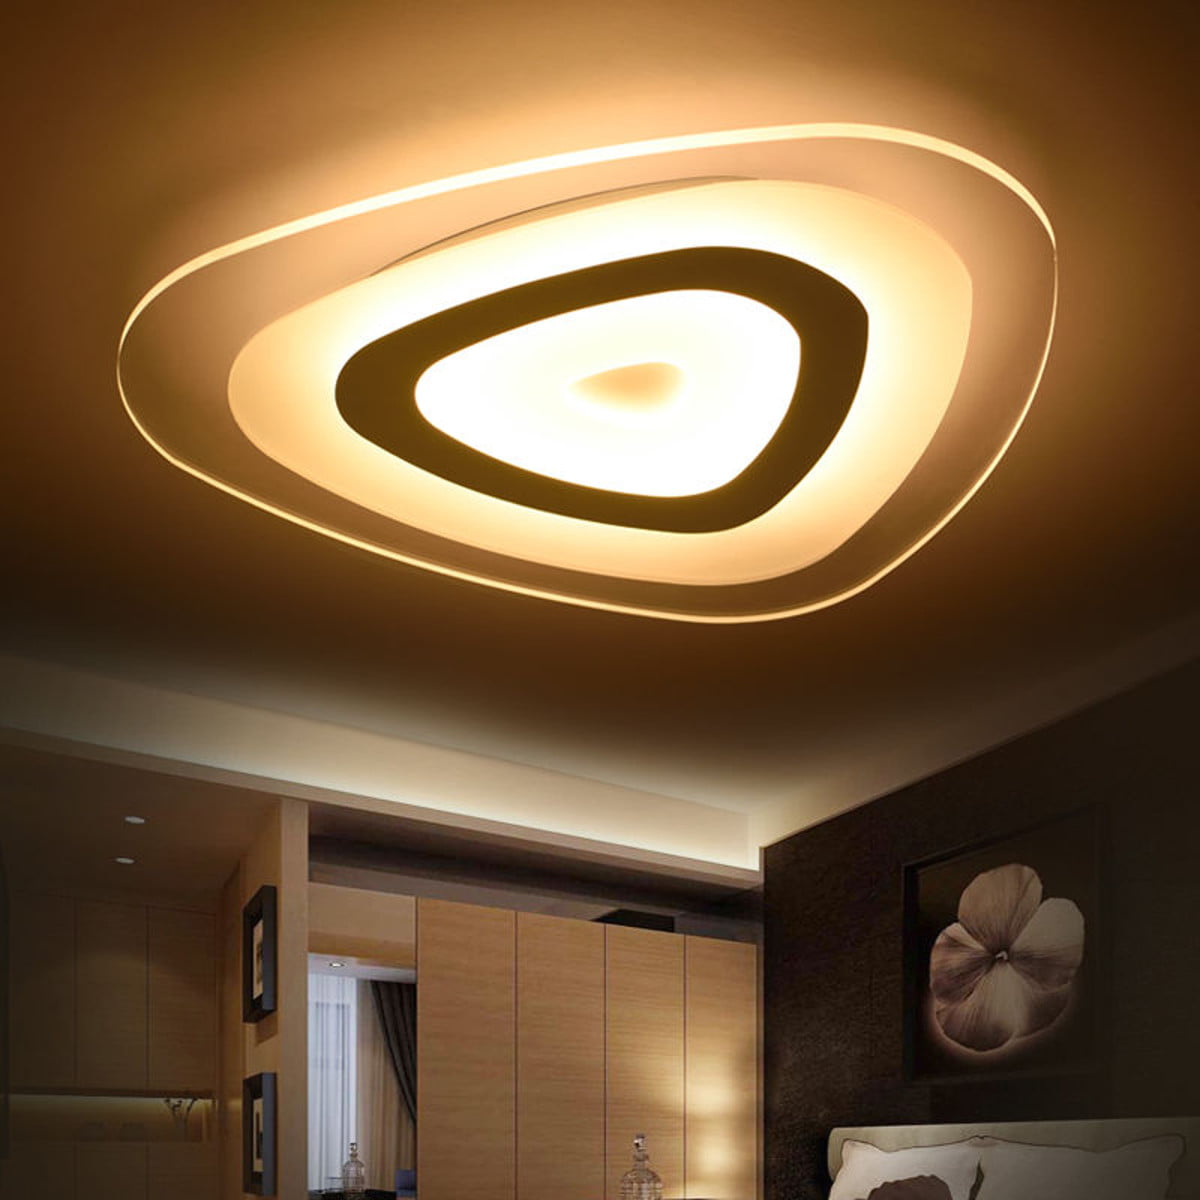 UltraThin LED Ceiling Lights Modern Lamp Dimmable Bedroom Mount Lighting Fixture 